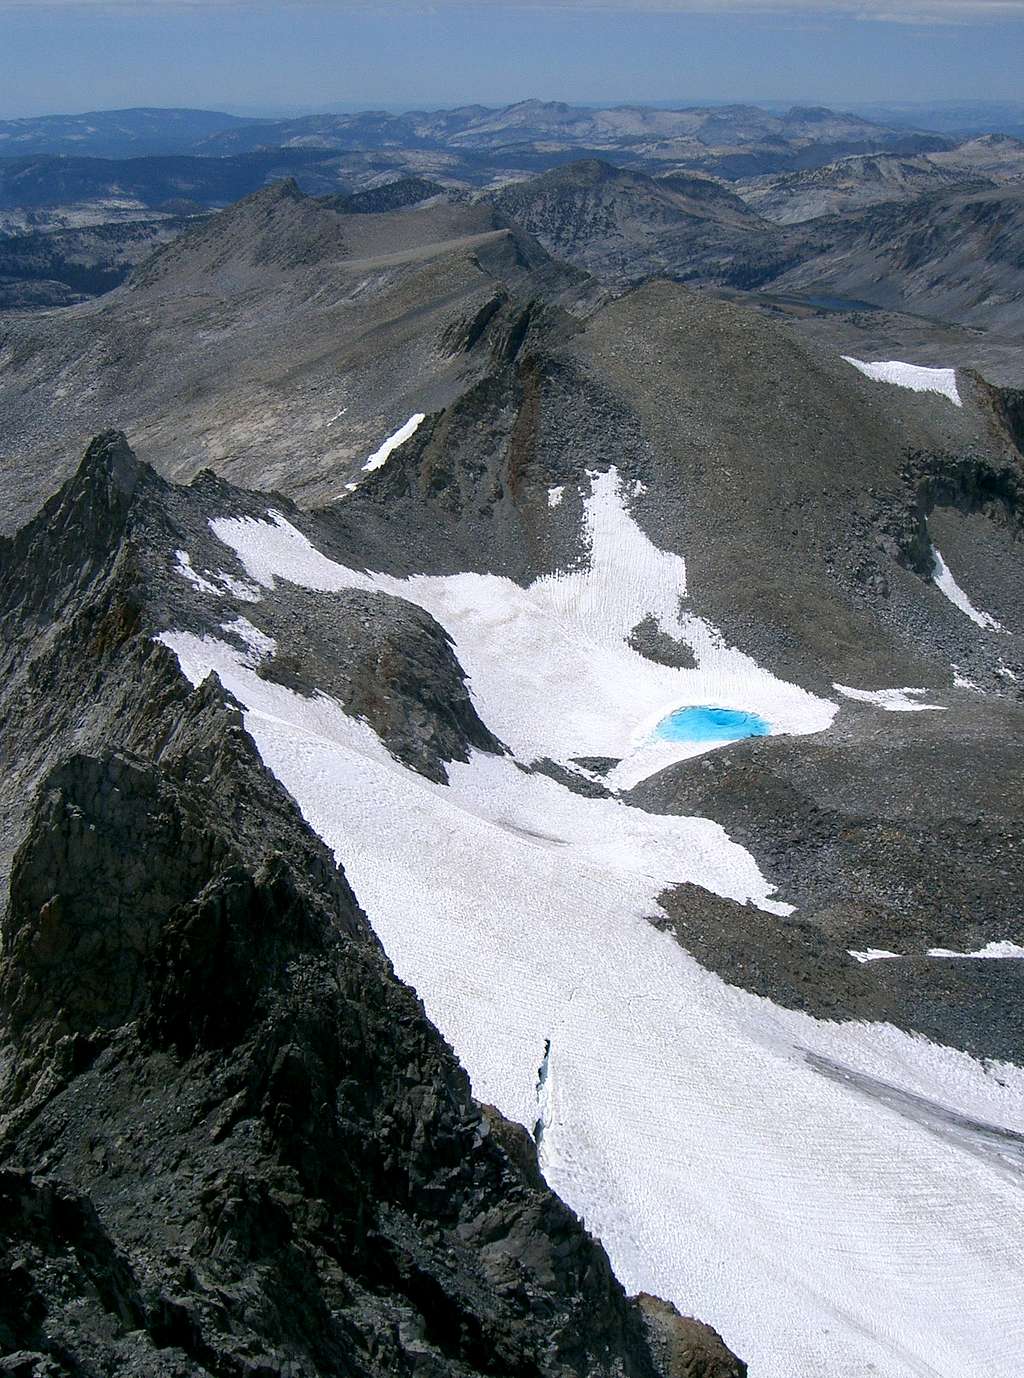 A Drop of Blue in a Monochrome Landscape